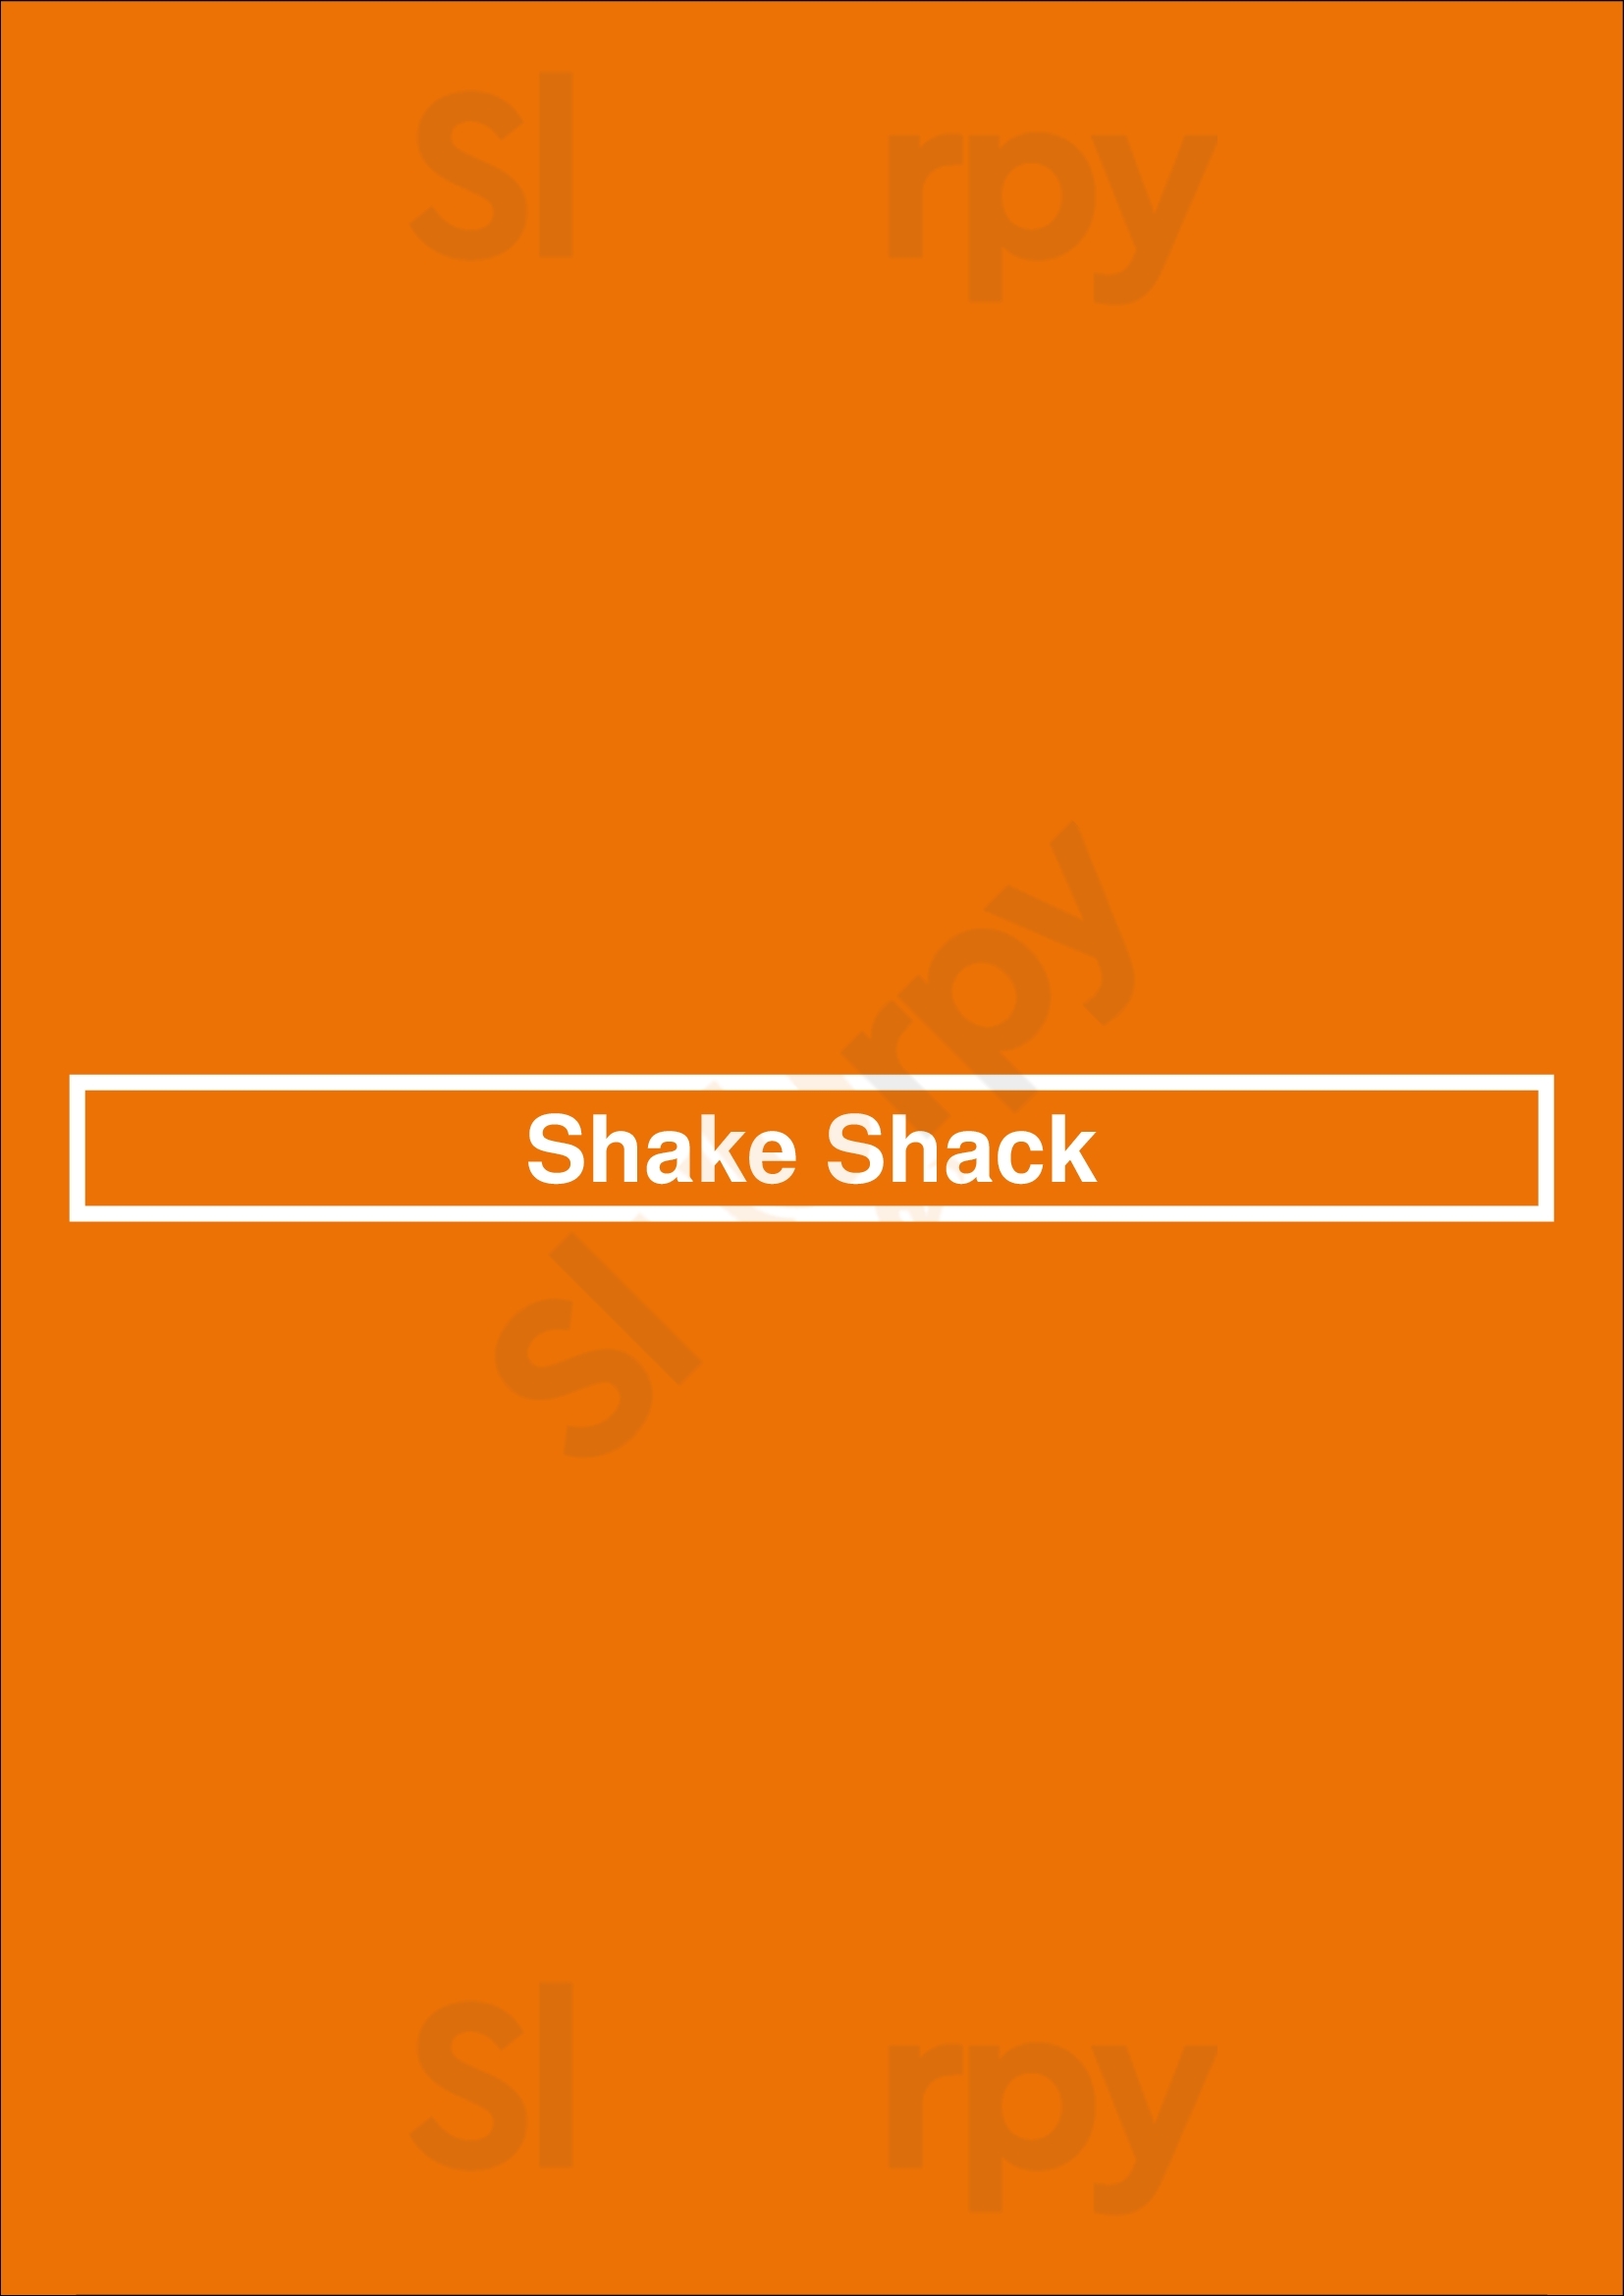 Shake Shack Dallas, Preston Royal Dallas Menu - 1